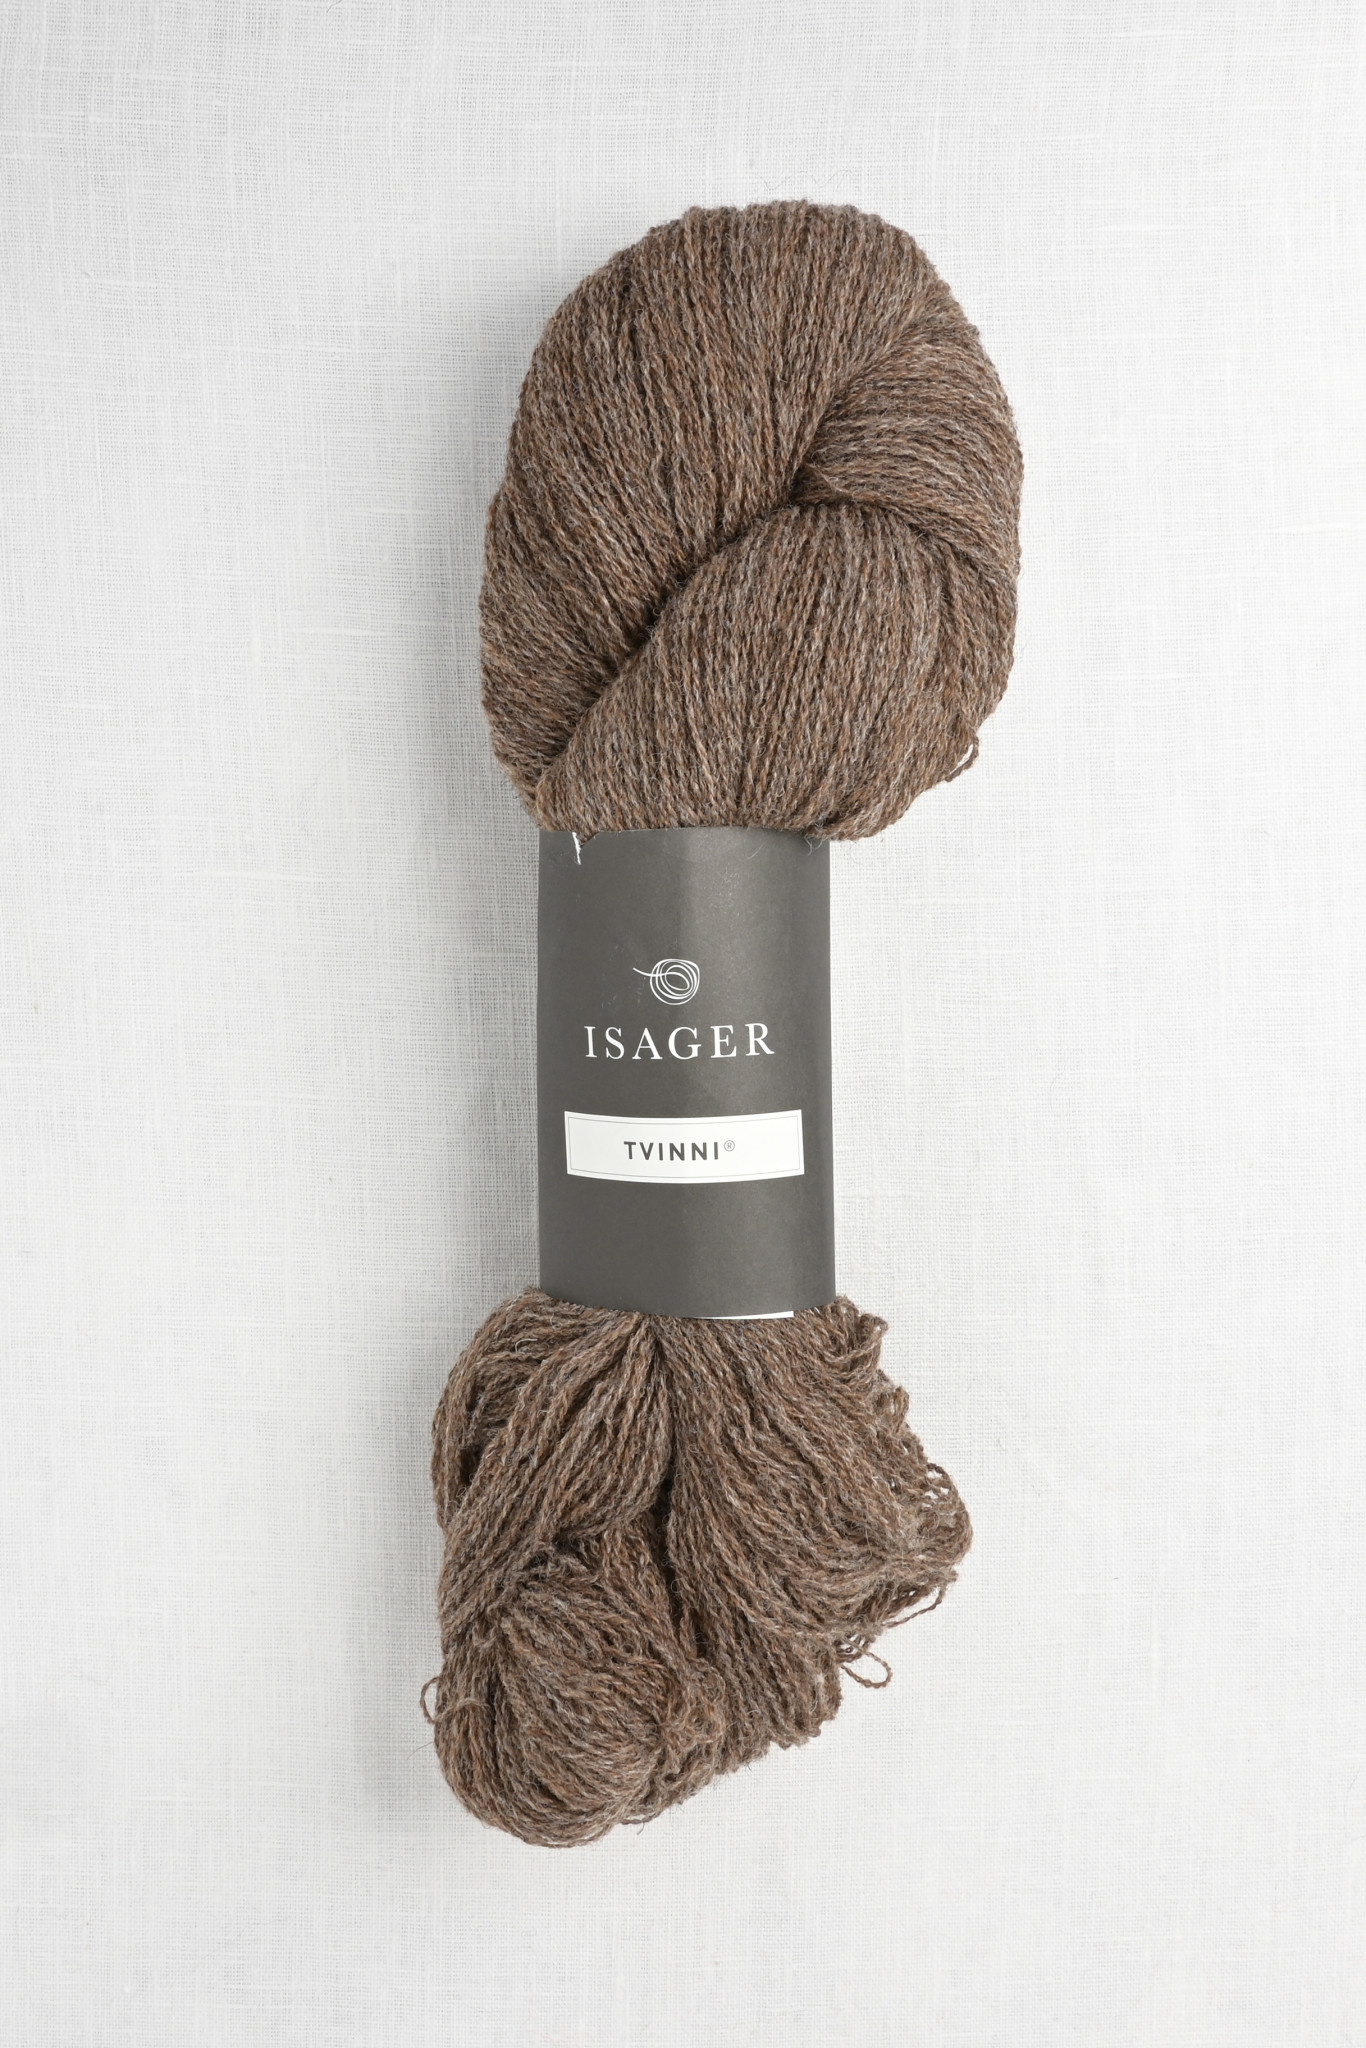 Isager Tvinni - Wool Fine Yarn